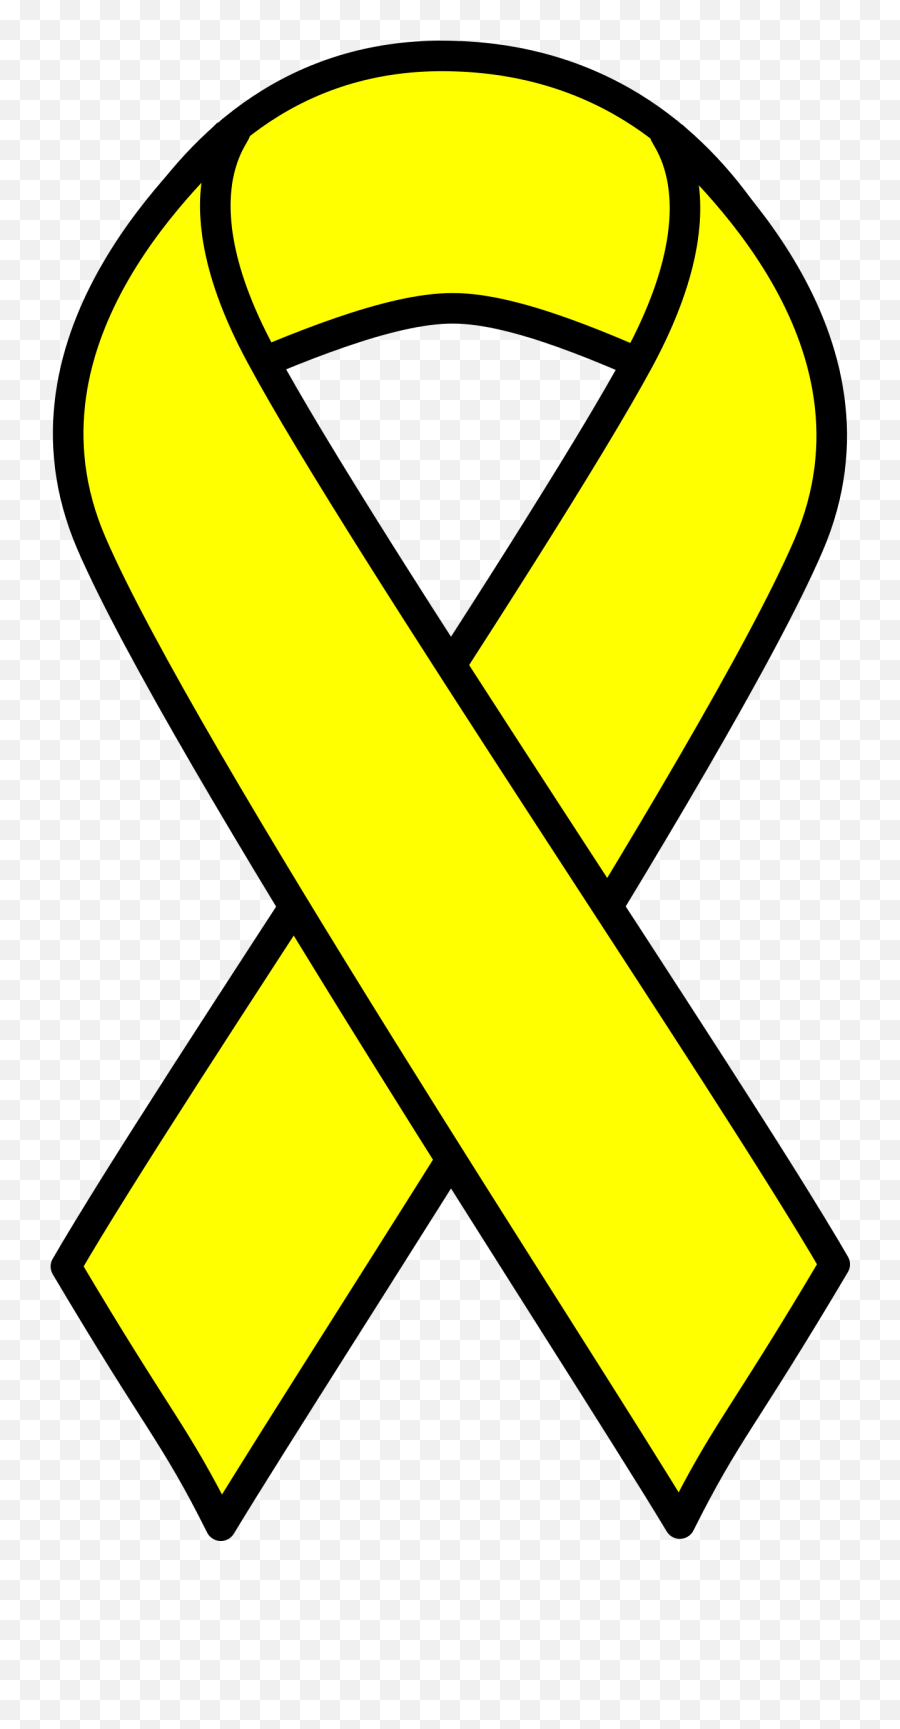 Clipart - Non Anatomy Bladder Outline Breast Cancer Cancer Ribbon Images Black And White Emoji,Ribbon Emoji